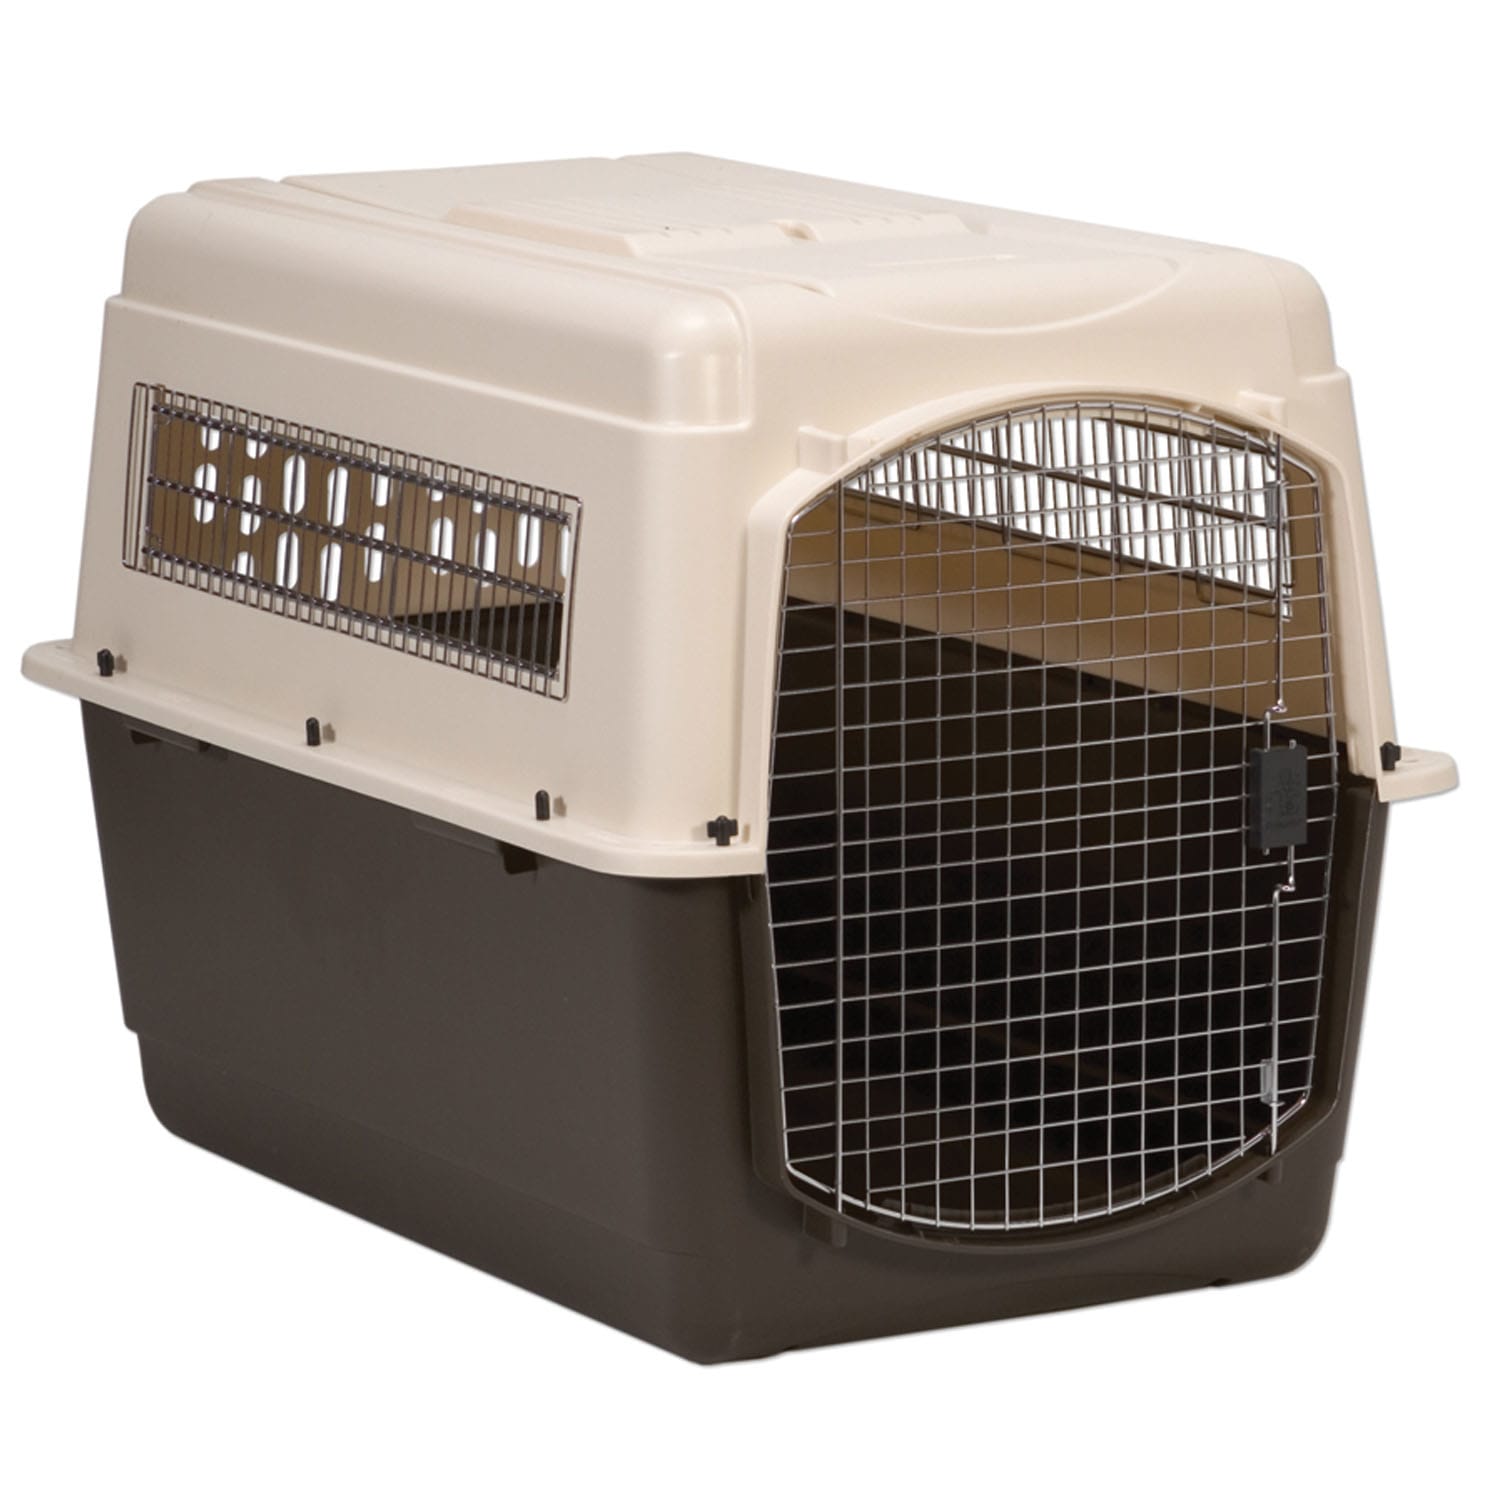 32 inch dog crate